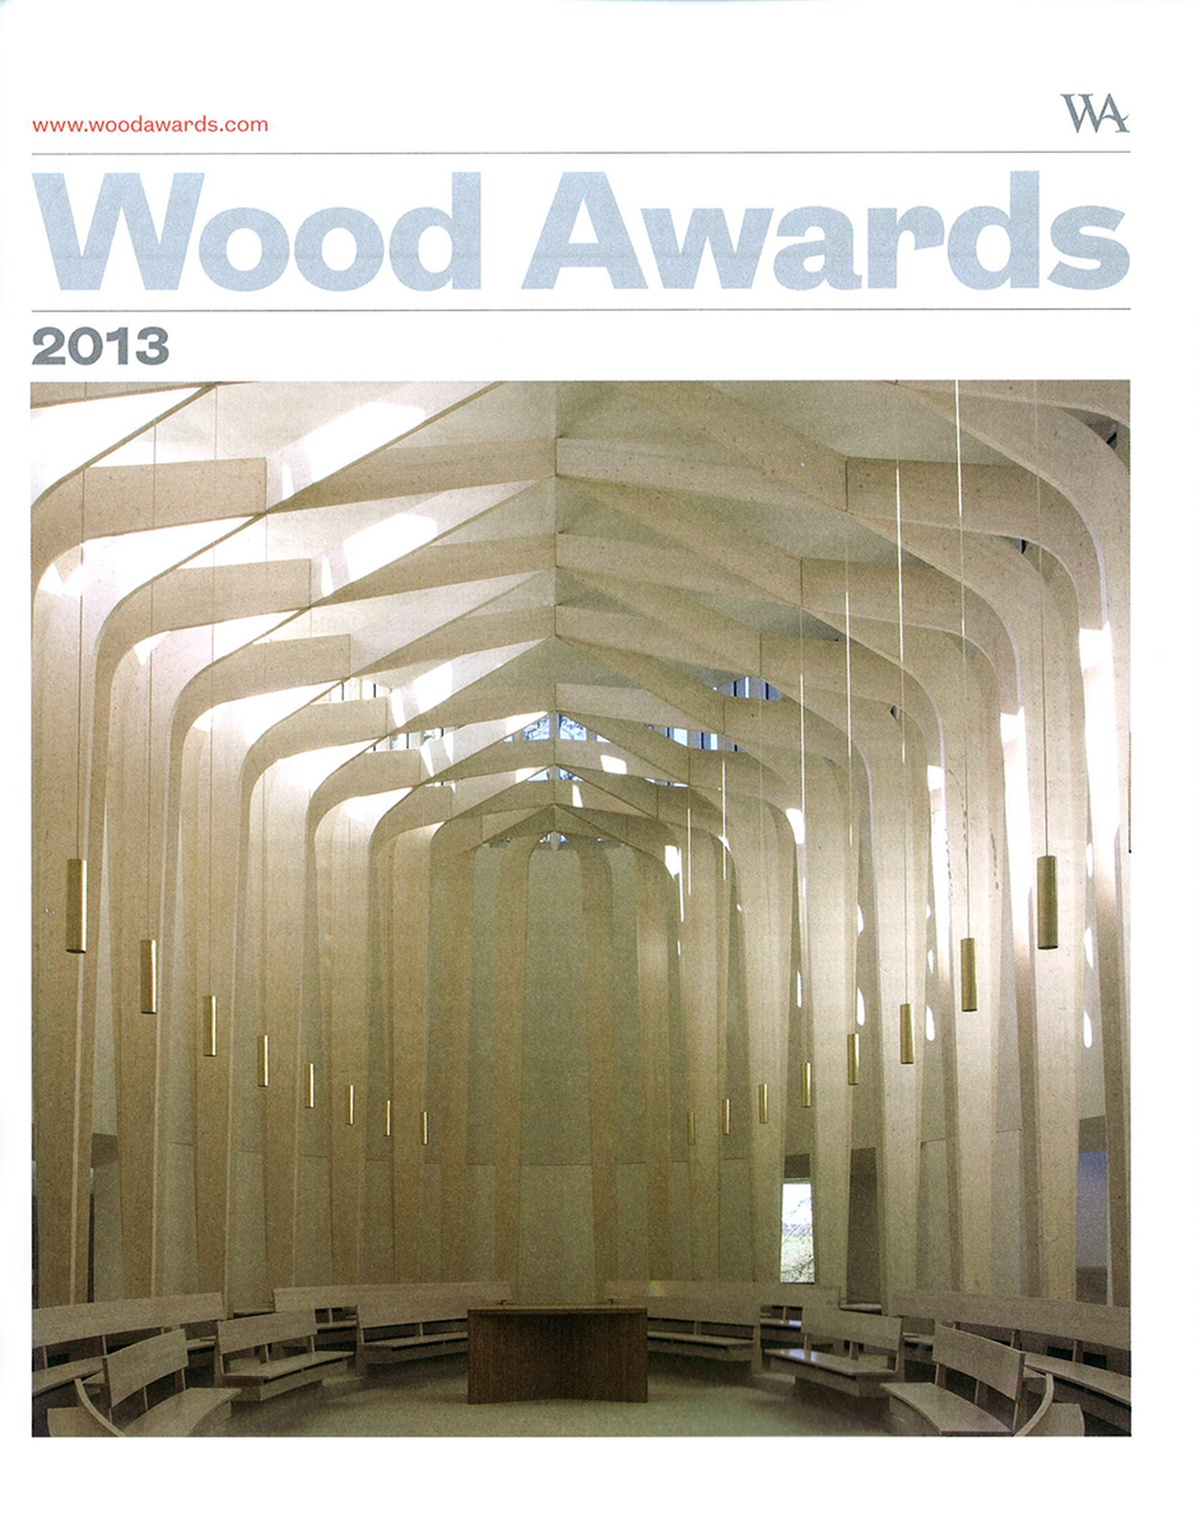 Wood Awards 2013, Gold Award and Structural Winner - RIBA Journal